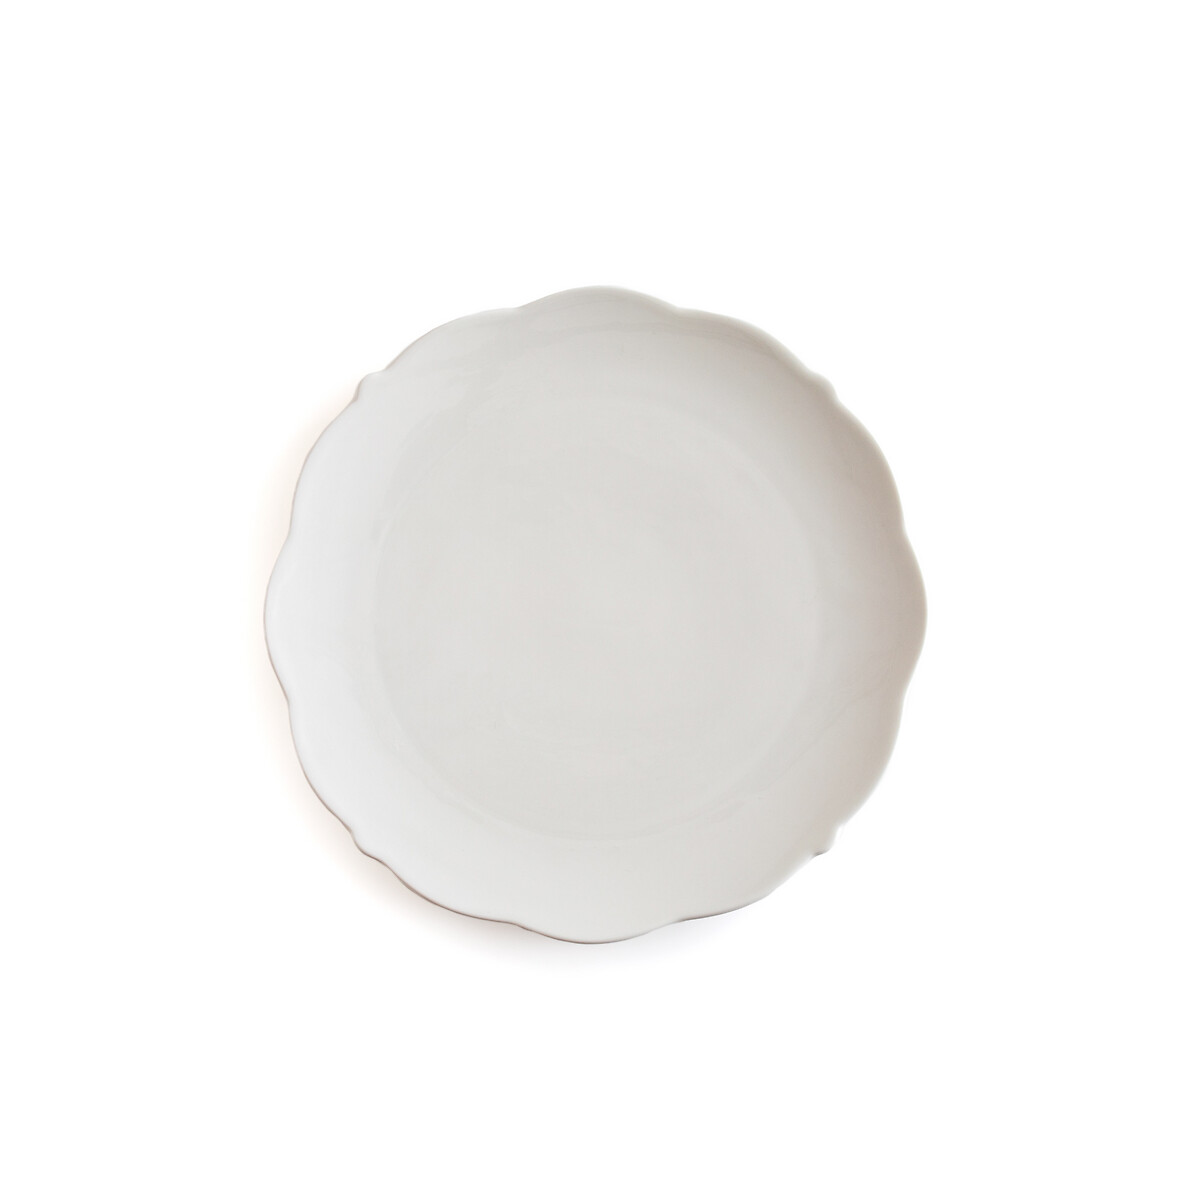 Lote de 4 platos llanos de porcelana, hirène blanco La Redoute Interieurs